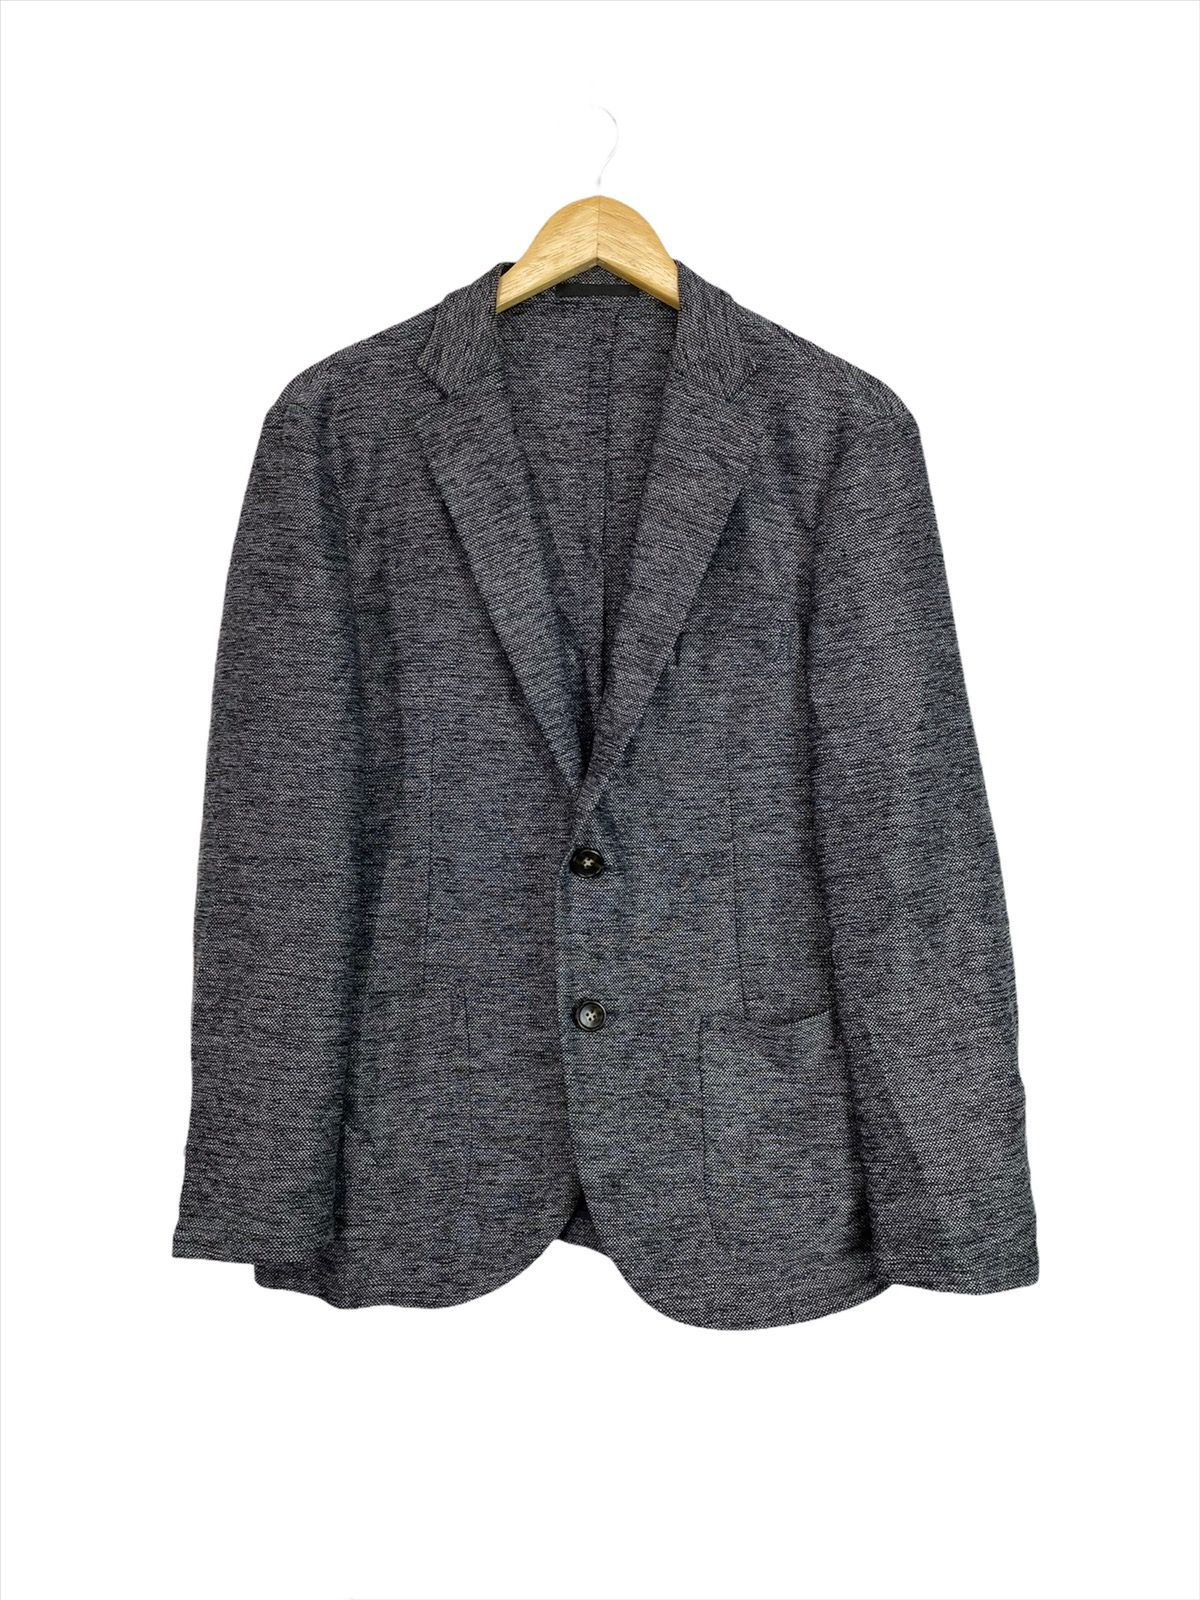 Rare Mackintosh Style Blazer Jacket - 1